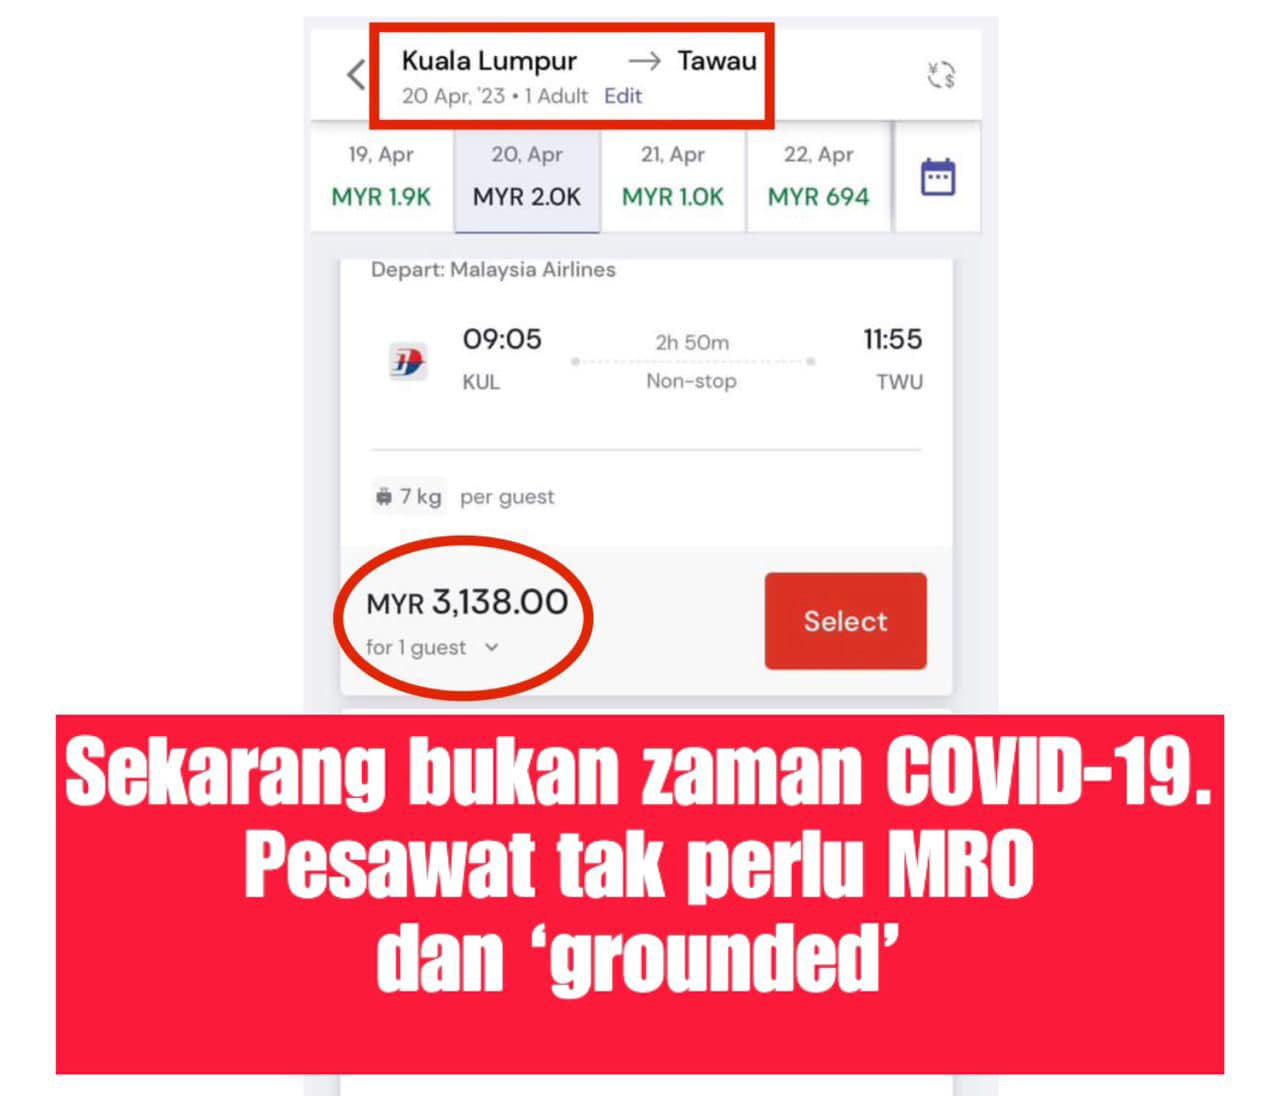 May be an image of text that says "Kuala umpur → Tawau 20 Apr. 23 Adult Edit 19, Apr MYR 1.9K 20, Apr MYR 2.0K 21,Apr MYR 1.0K 22, Apr MYR 694 Depart: Malaysia Airlines 09:05 KUL 2h 50m Non-stop 11:55 TWU kg per guest MYR 3,138.00 for guest Select Sekarang bukan zaman COVID-19. Pesawat tak perlu MRO dan 'grounded'"